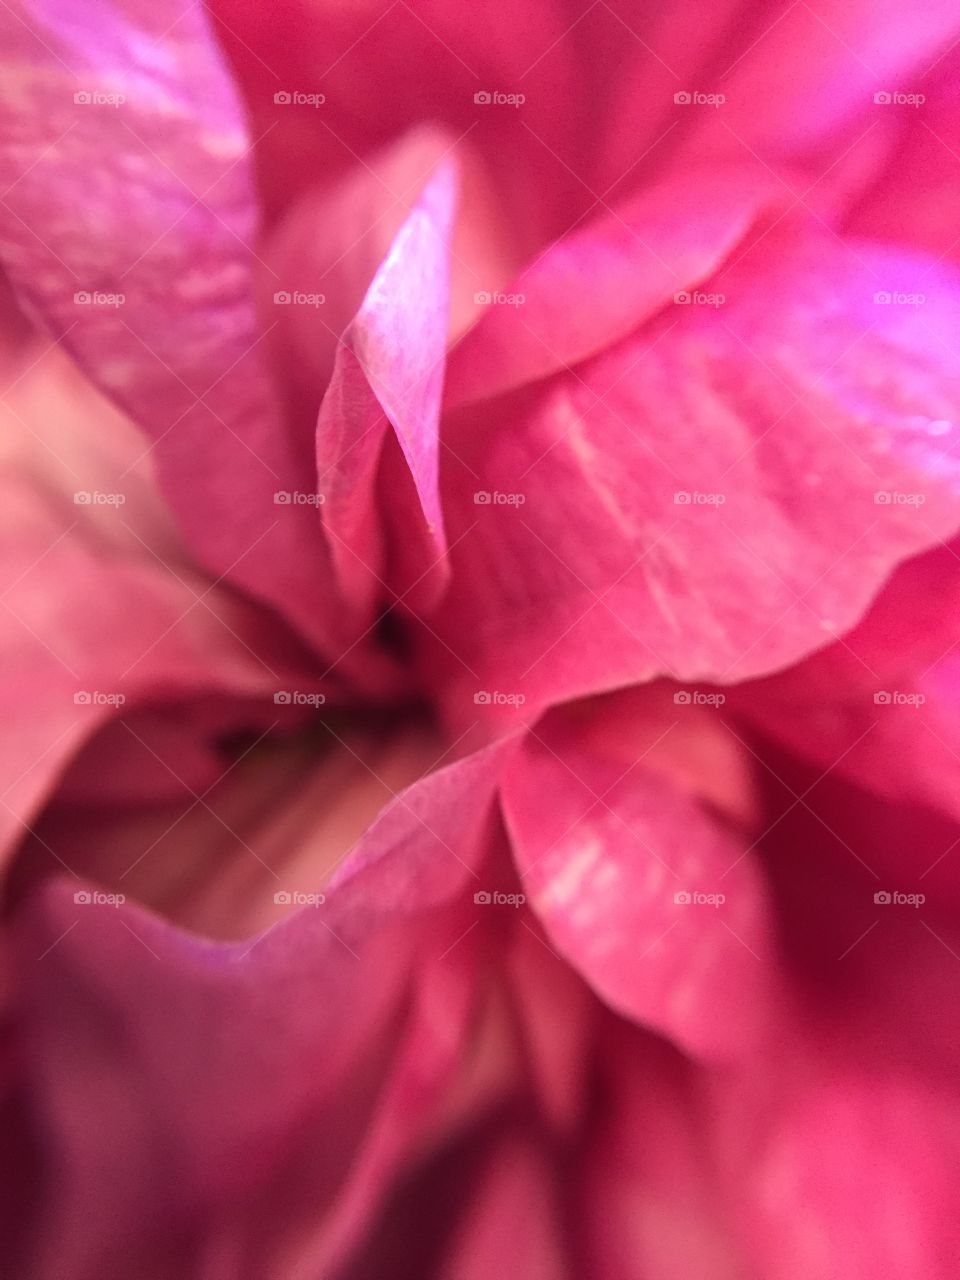 Pink Rose petals in closeup